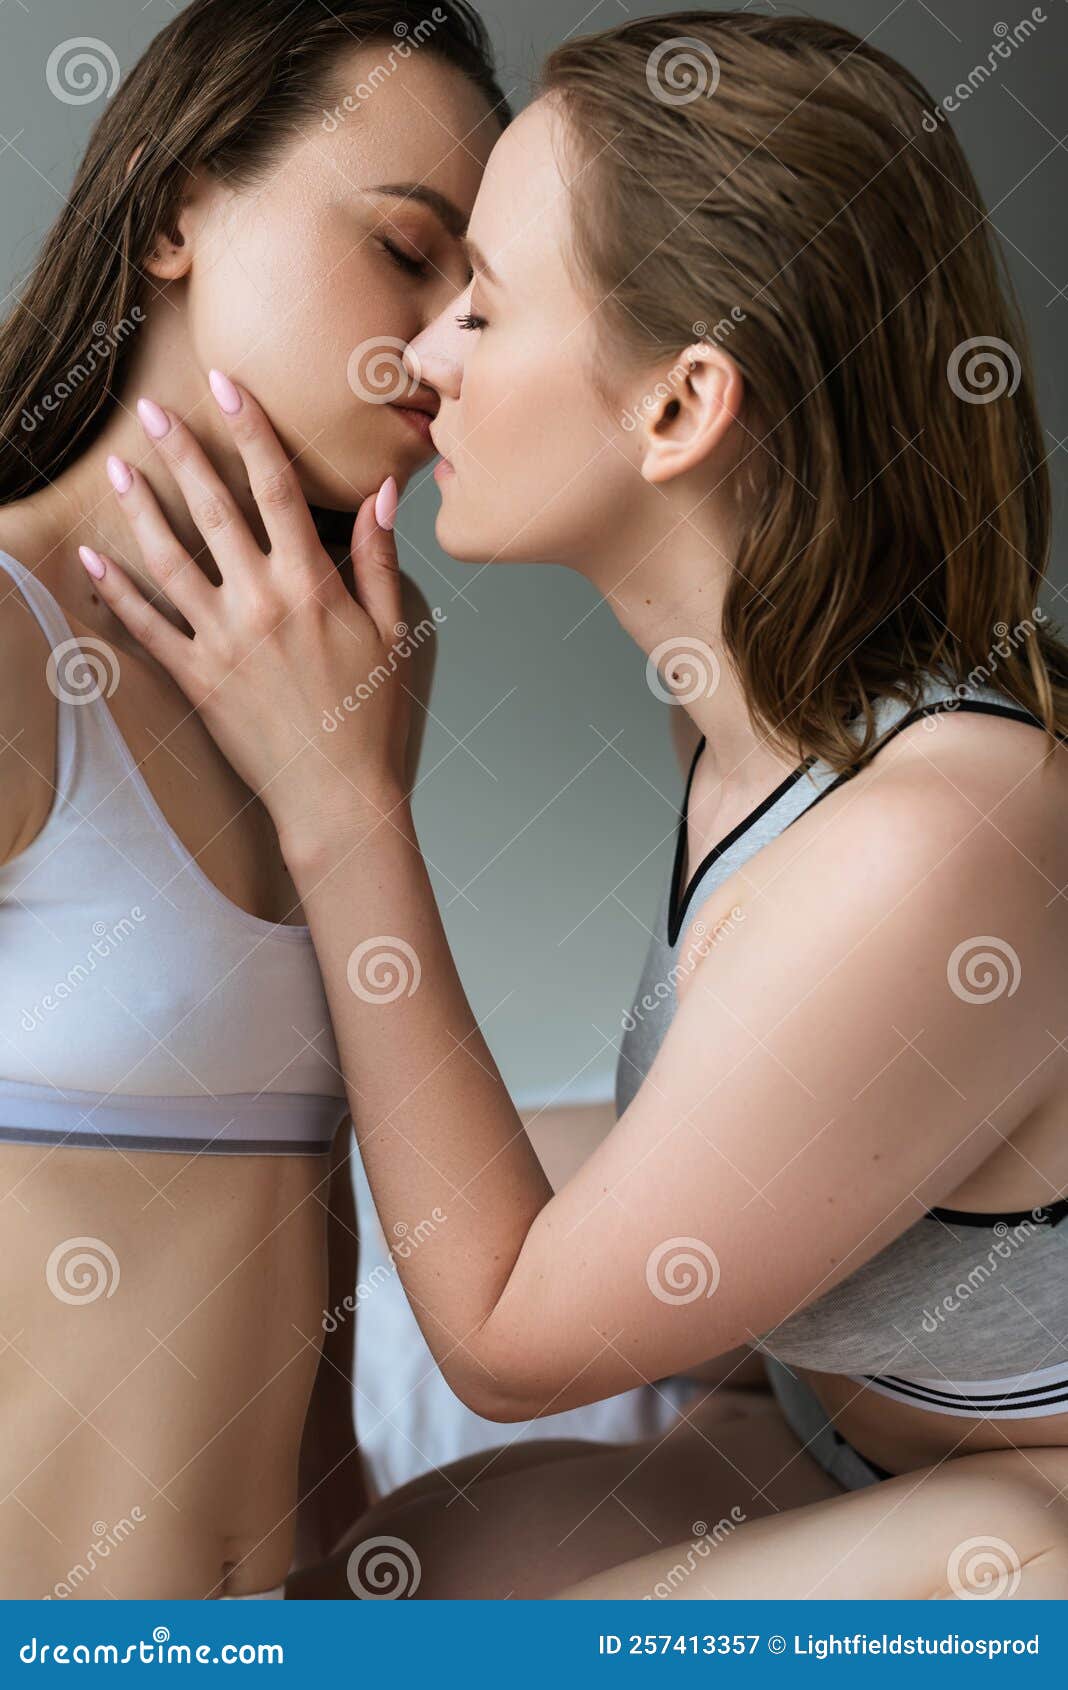 Lesbicas besandose